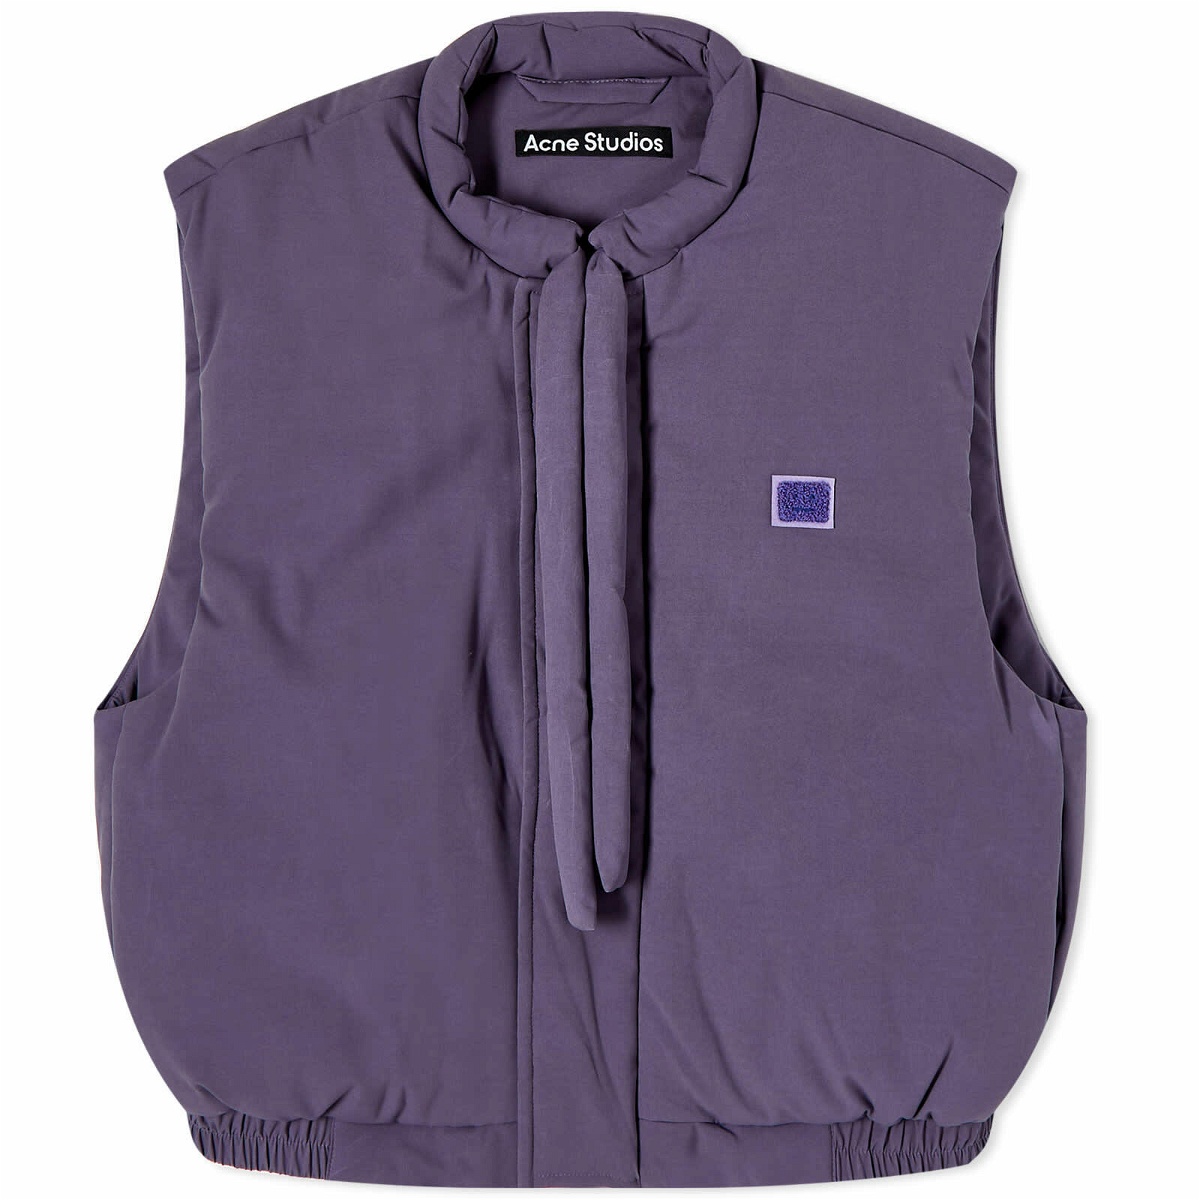 Acne Studios Osalo Heat Change Padded Face Vest in Black/Lilac Purple ...